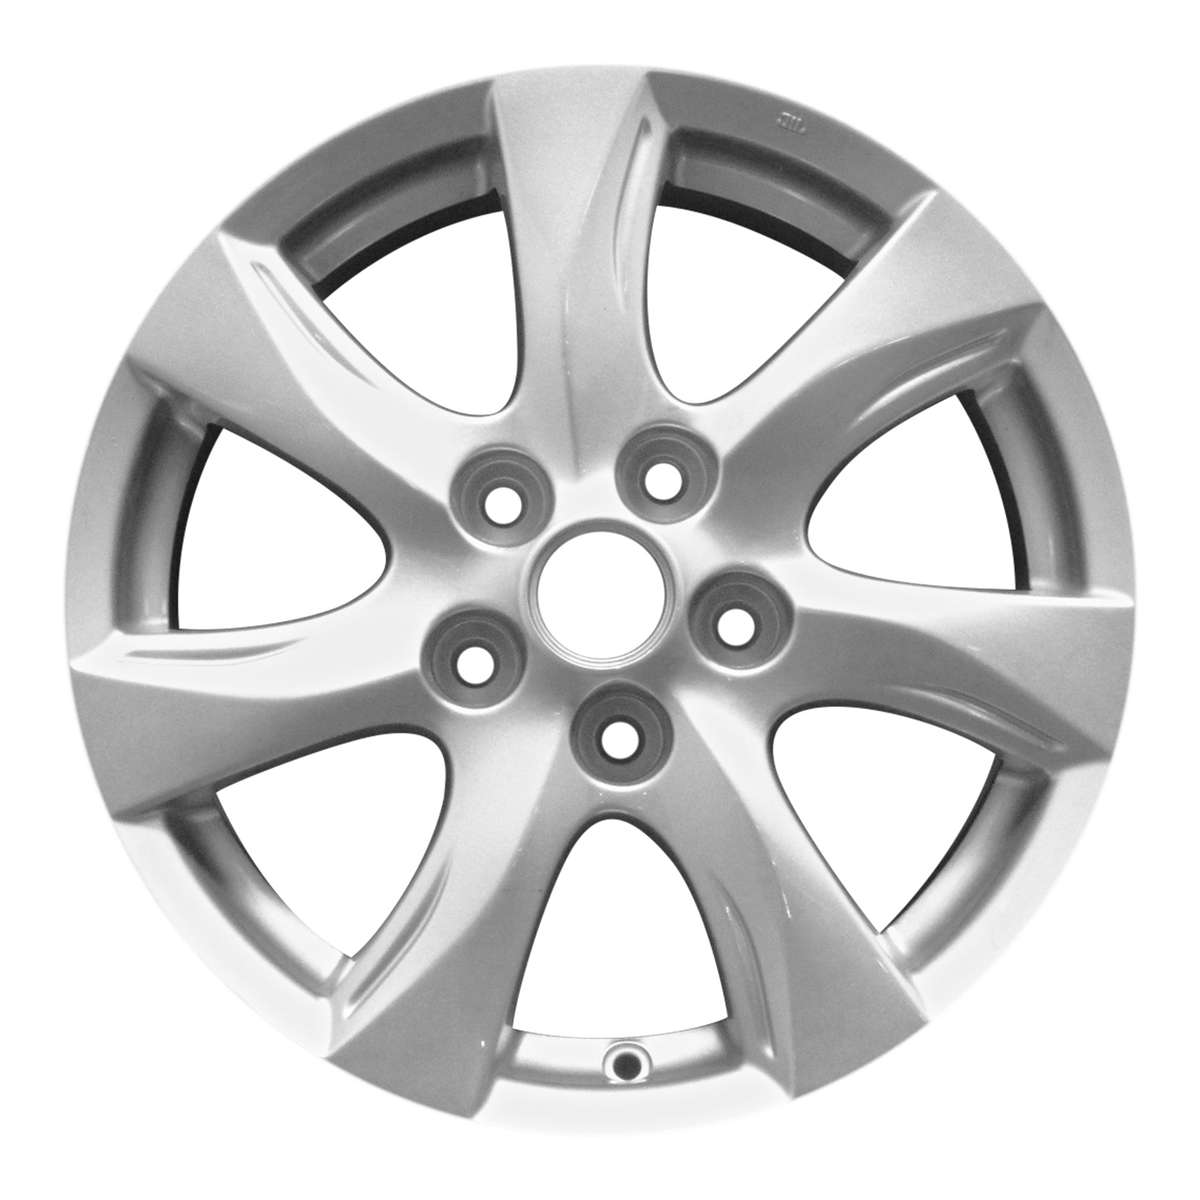 2011 Mazda 3 New 16" Replacement Wheel Rim RW64927S